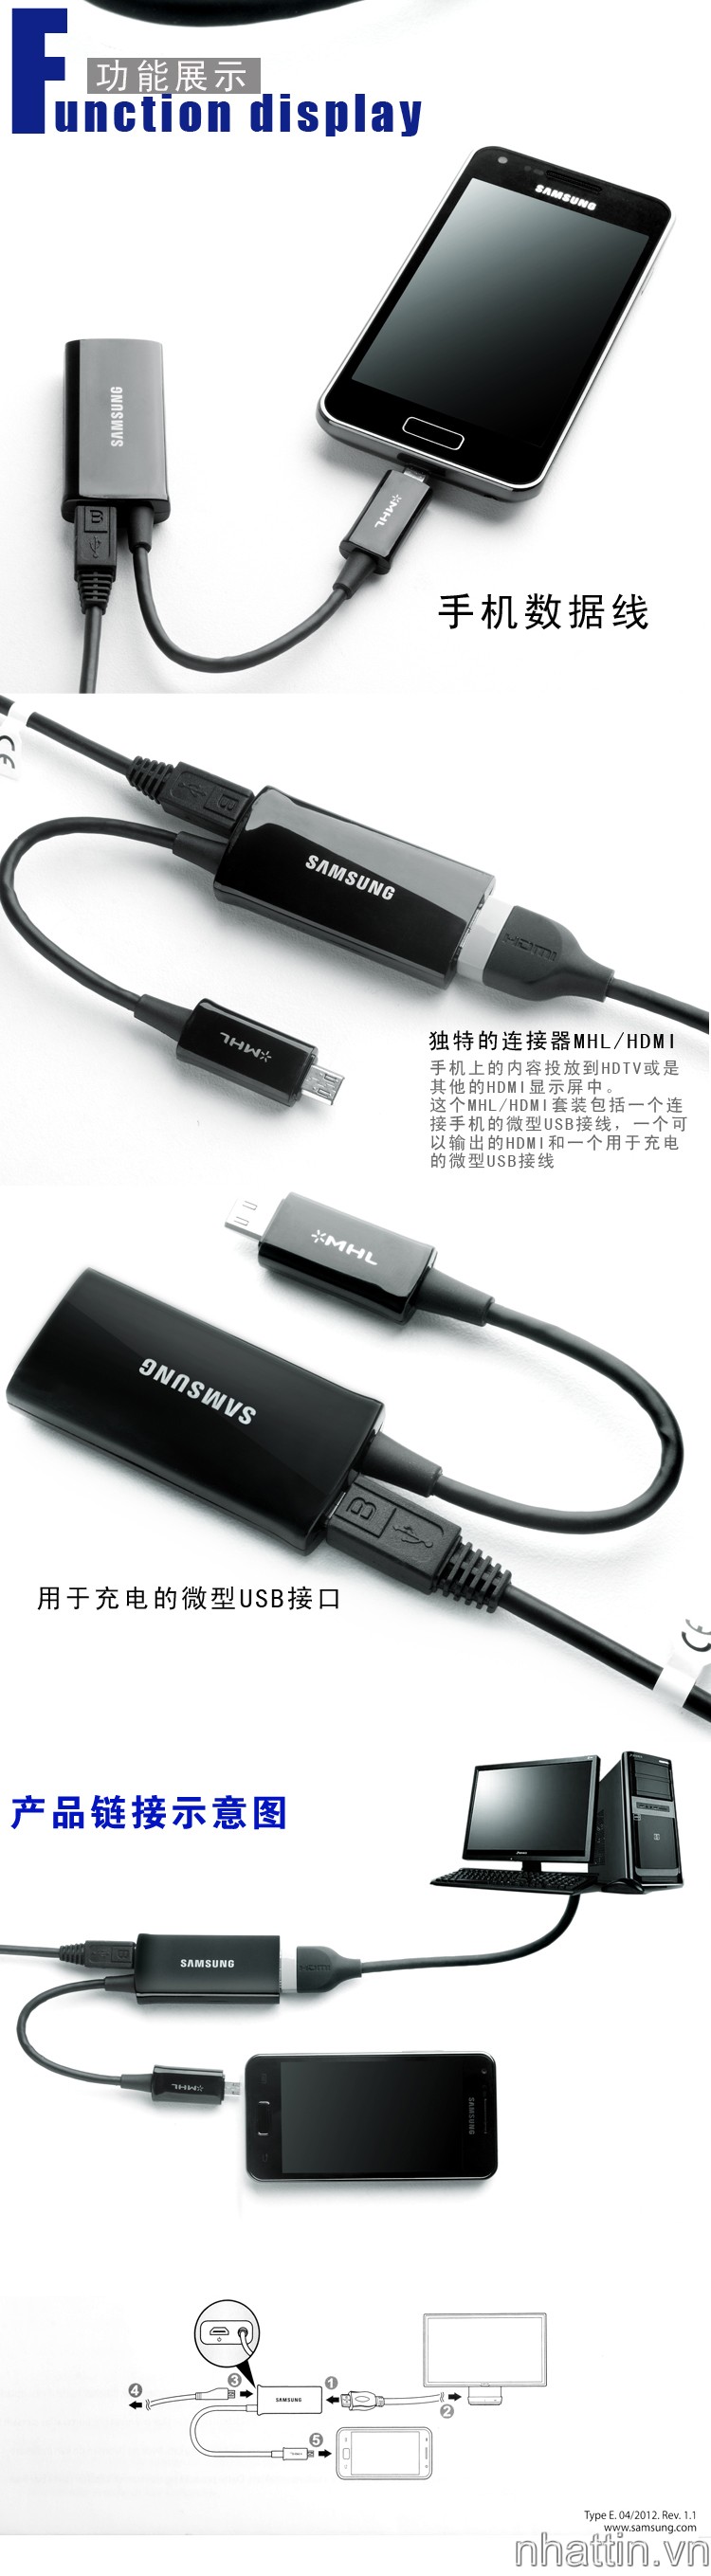 Cáp MHL HDMI cho Samsung S3, Note2